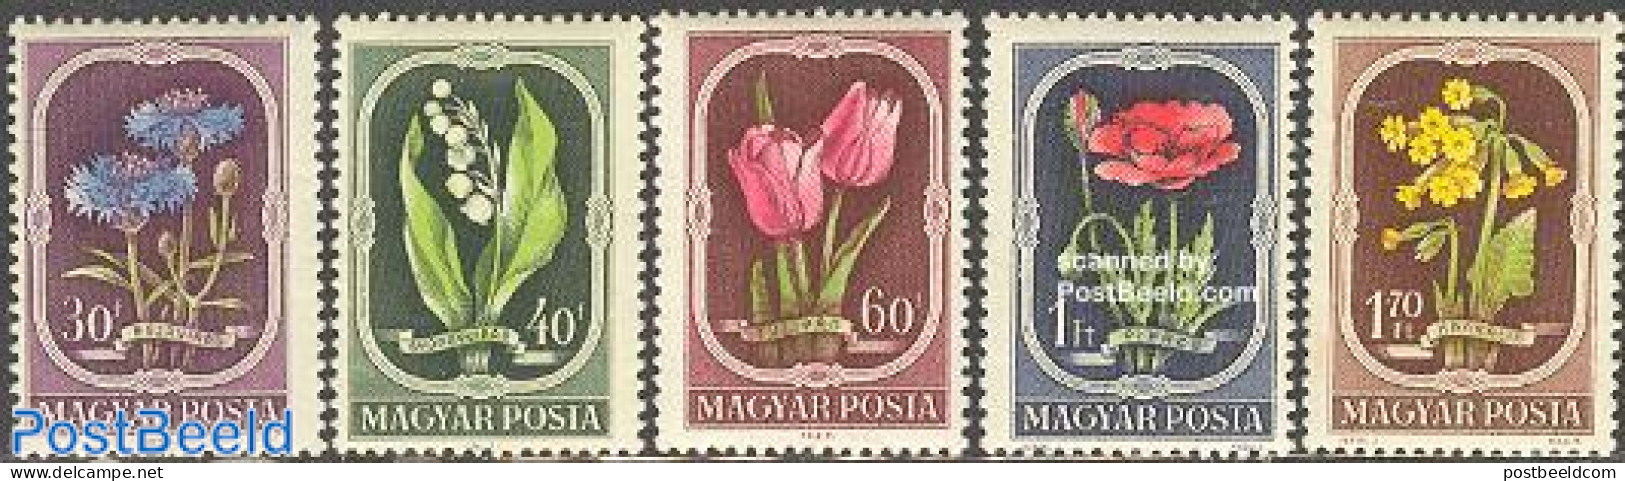 Hungary 1951 Flowers 5v, Mint NH, Nature - Flowers & Plants - Ongebruikt